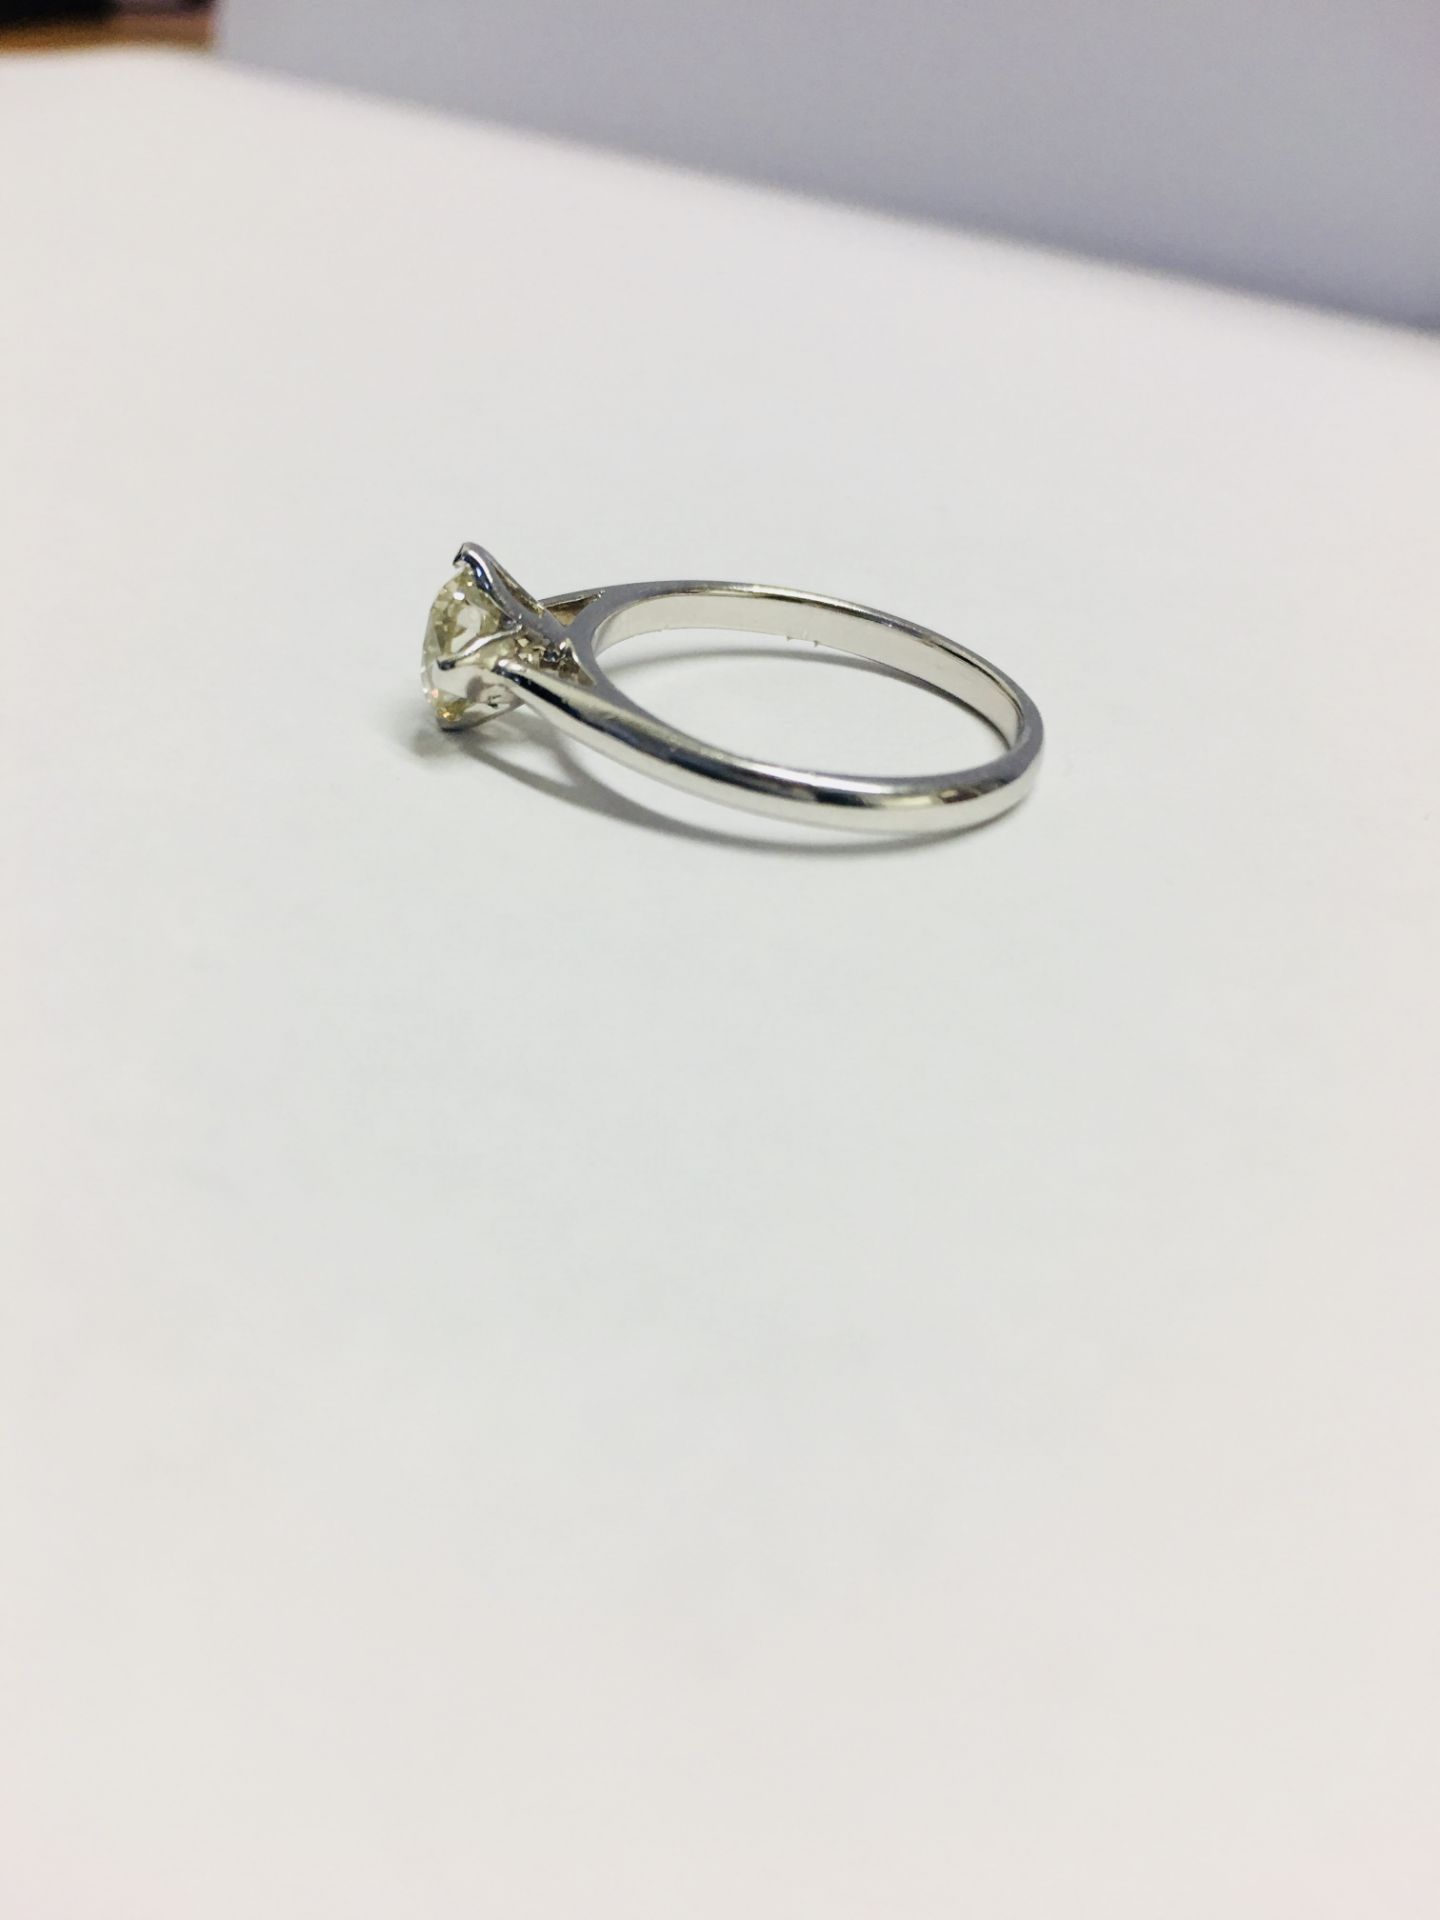 1Ct Brilliant Cut Diamond Solitaire Ring, - Image 2 of 4